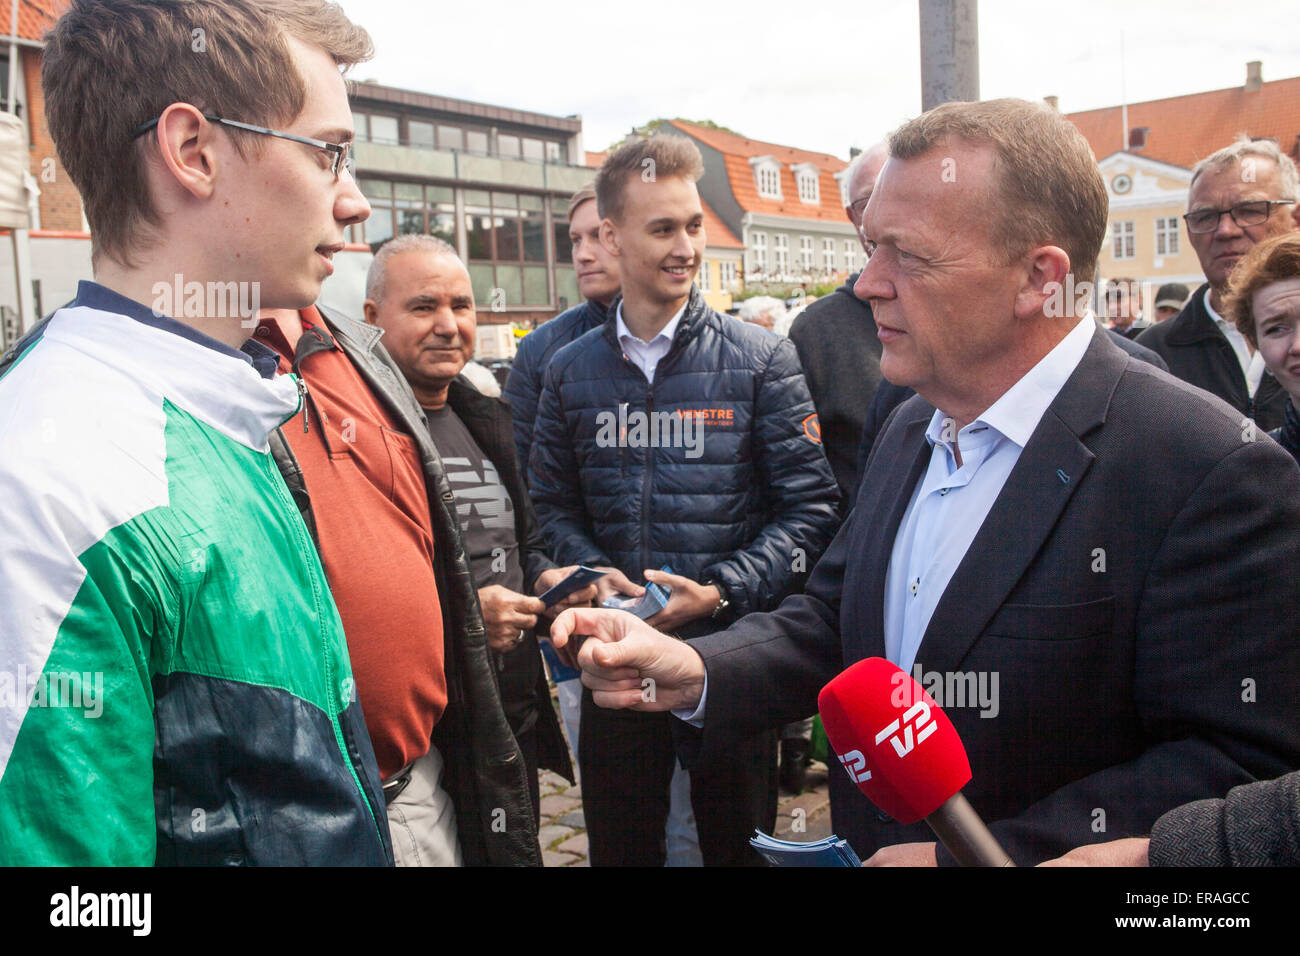 Koege, Denmark, May 30th, 2015: Danish opposition leader Lars Loekke Rasmussen (R) meets a young elector in Koege near Copenhagen Credit:  OJPHOTOS/Alamy Live News Stock Photo